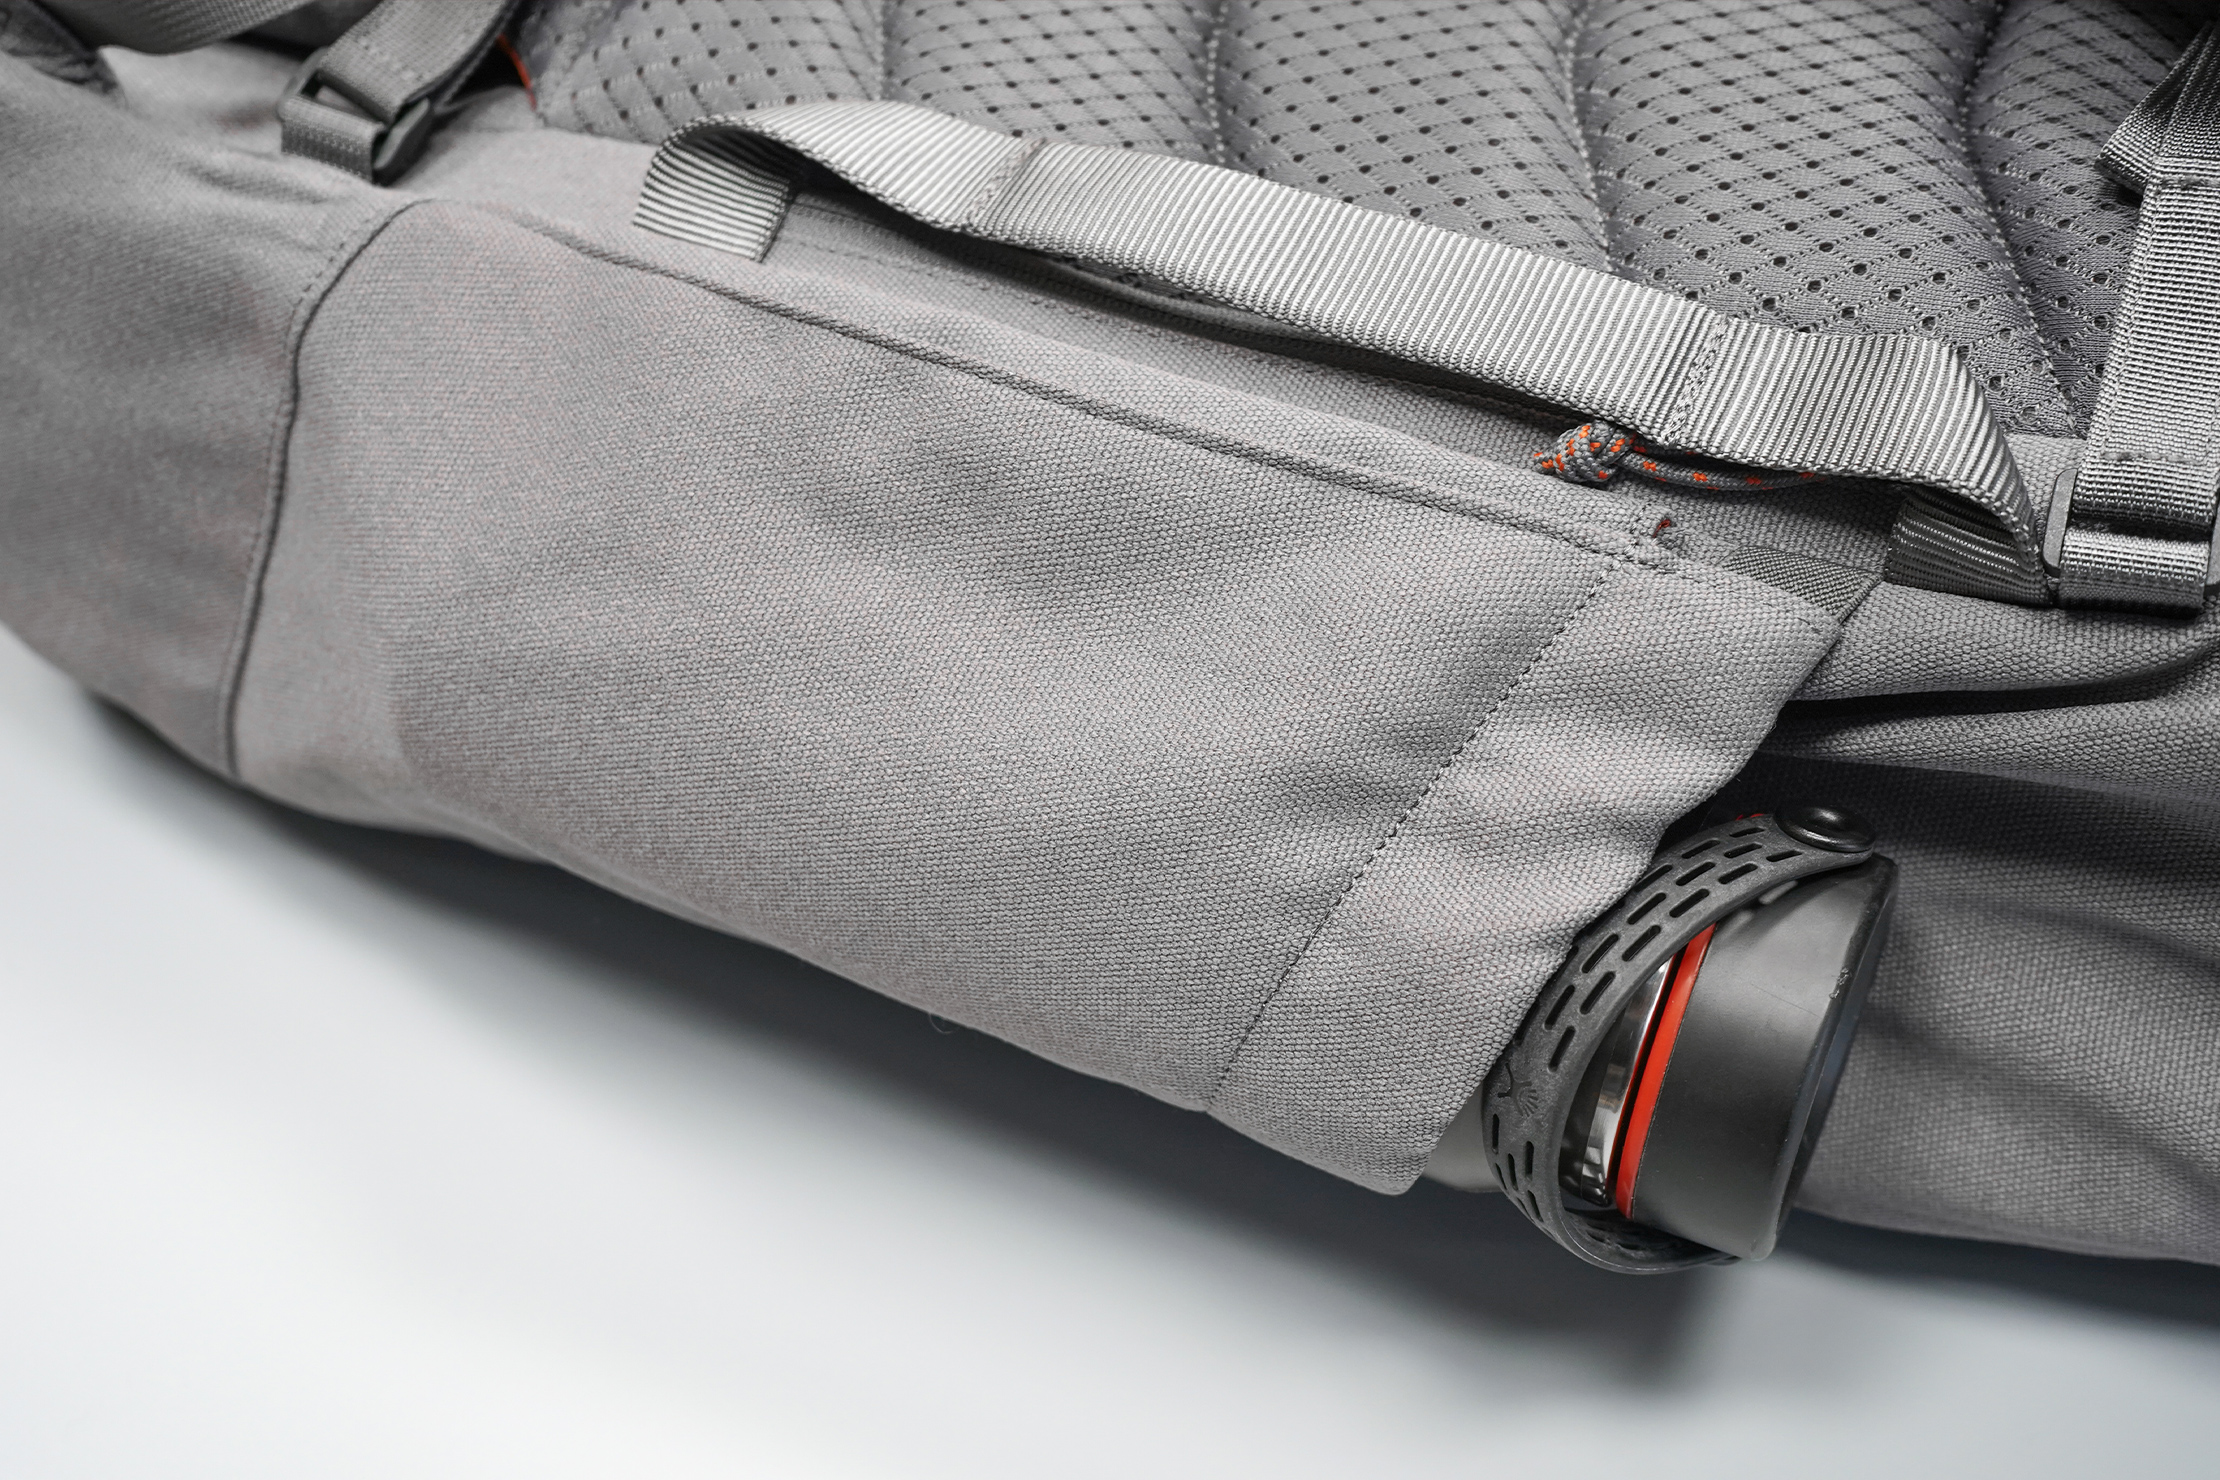 Salkan Backpacker | The Mainpack’s side pocket carrying a 32-ounce bottle